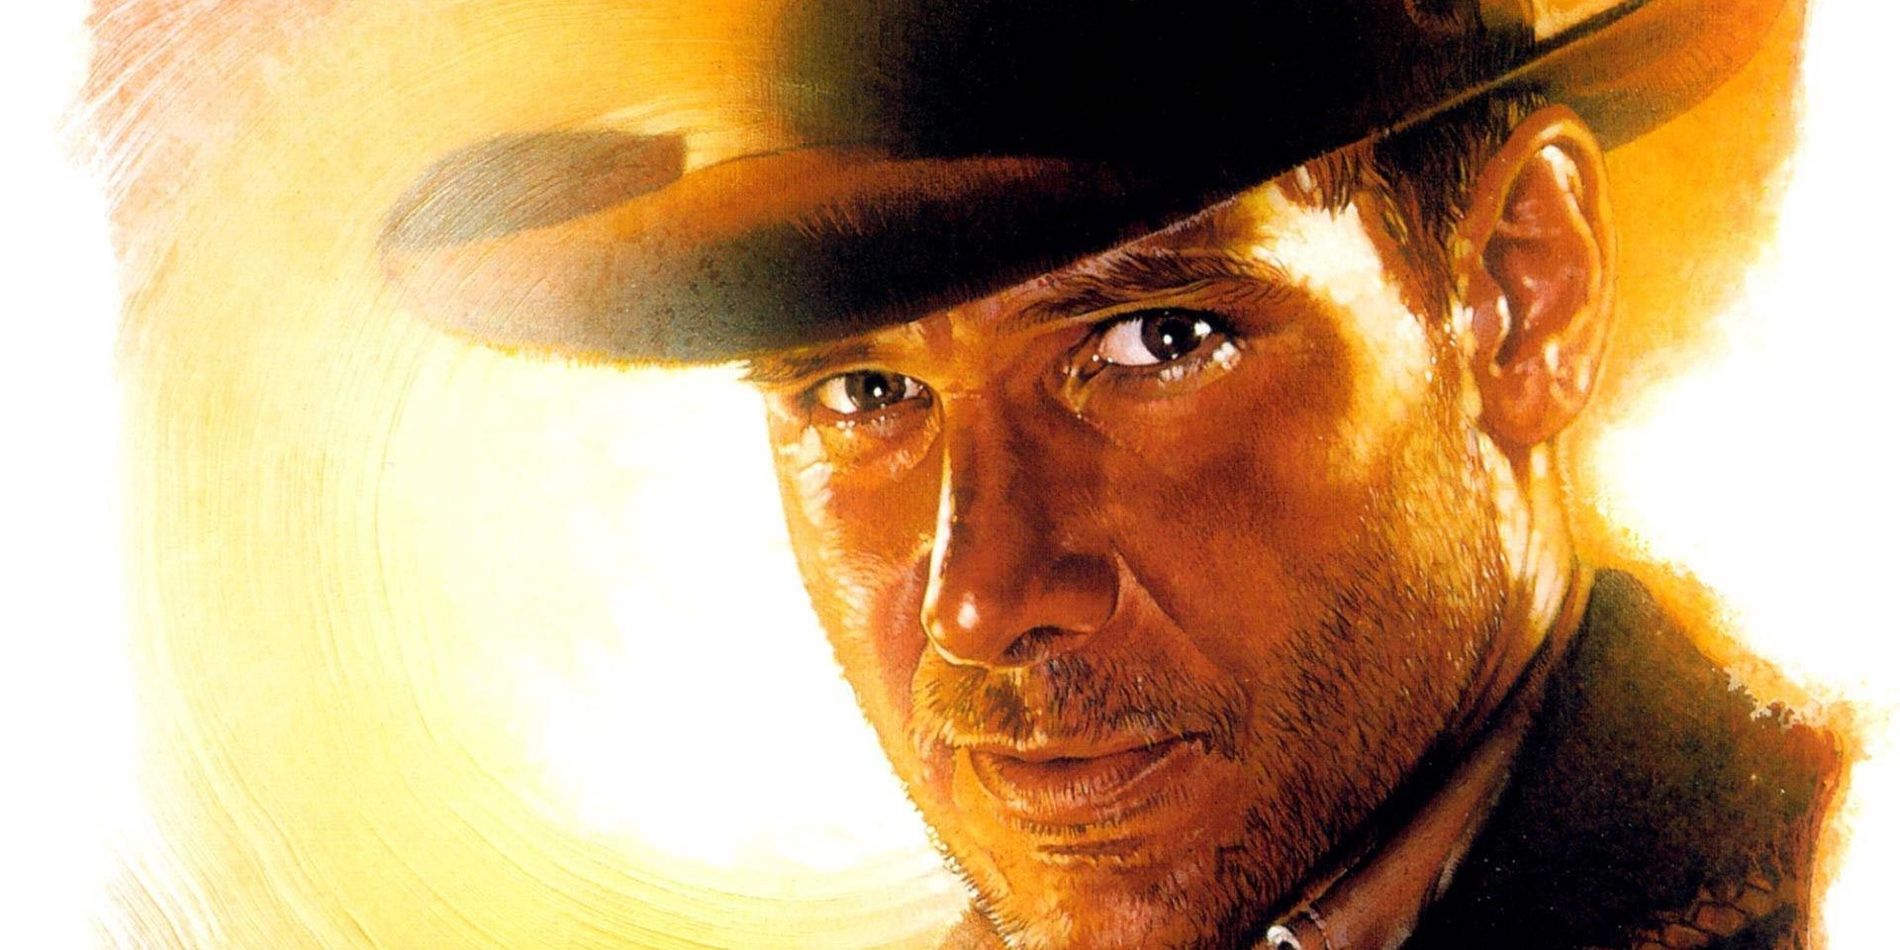 Indiana Jones Vs Lara Croft Whos The Better Action Archeologist